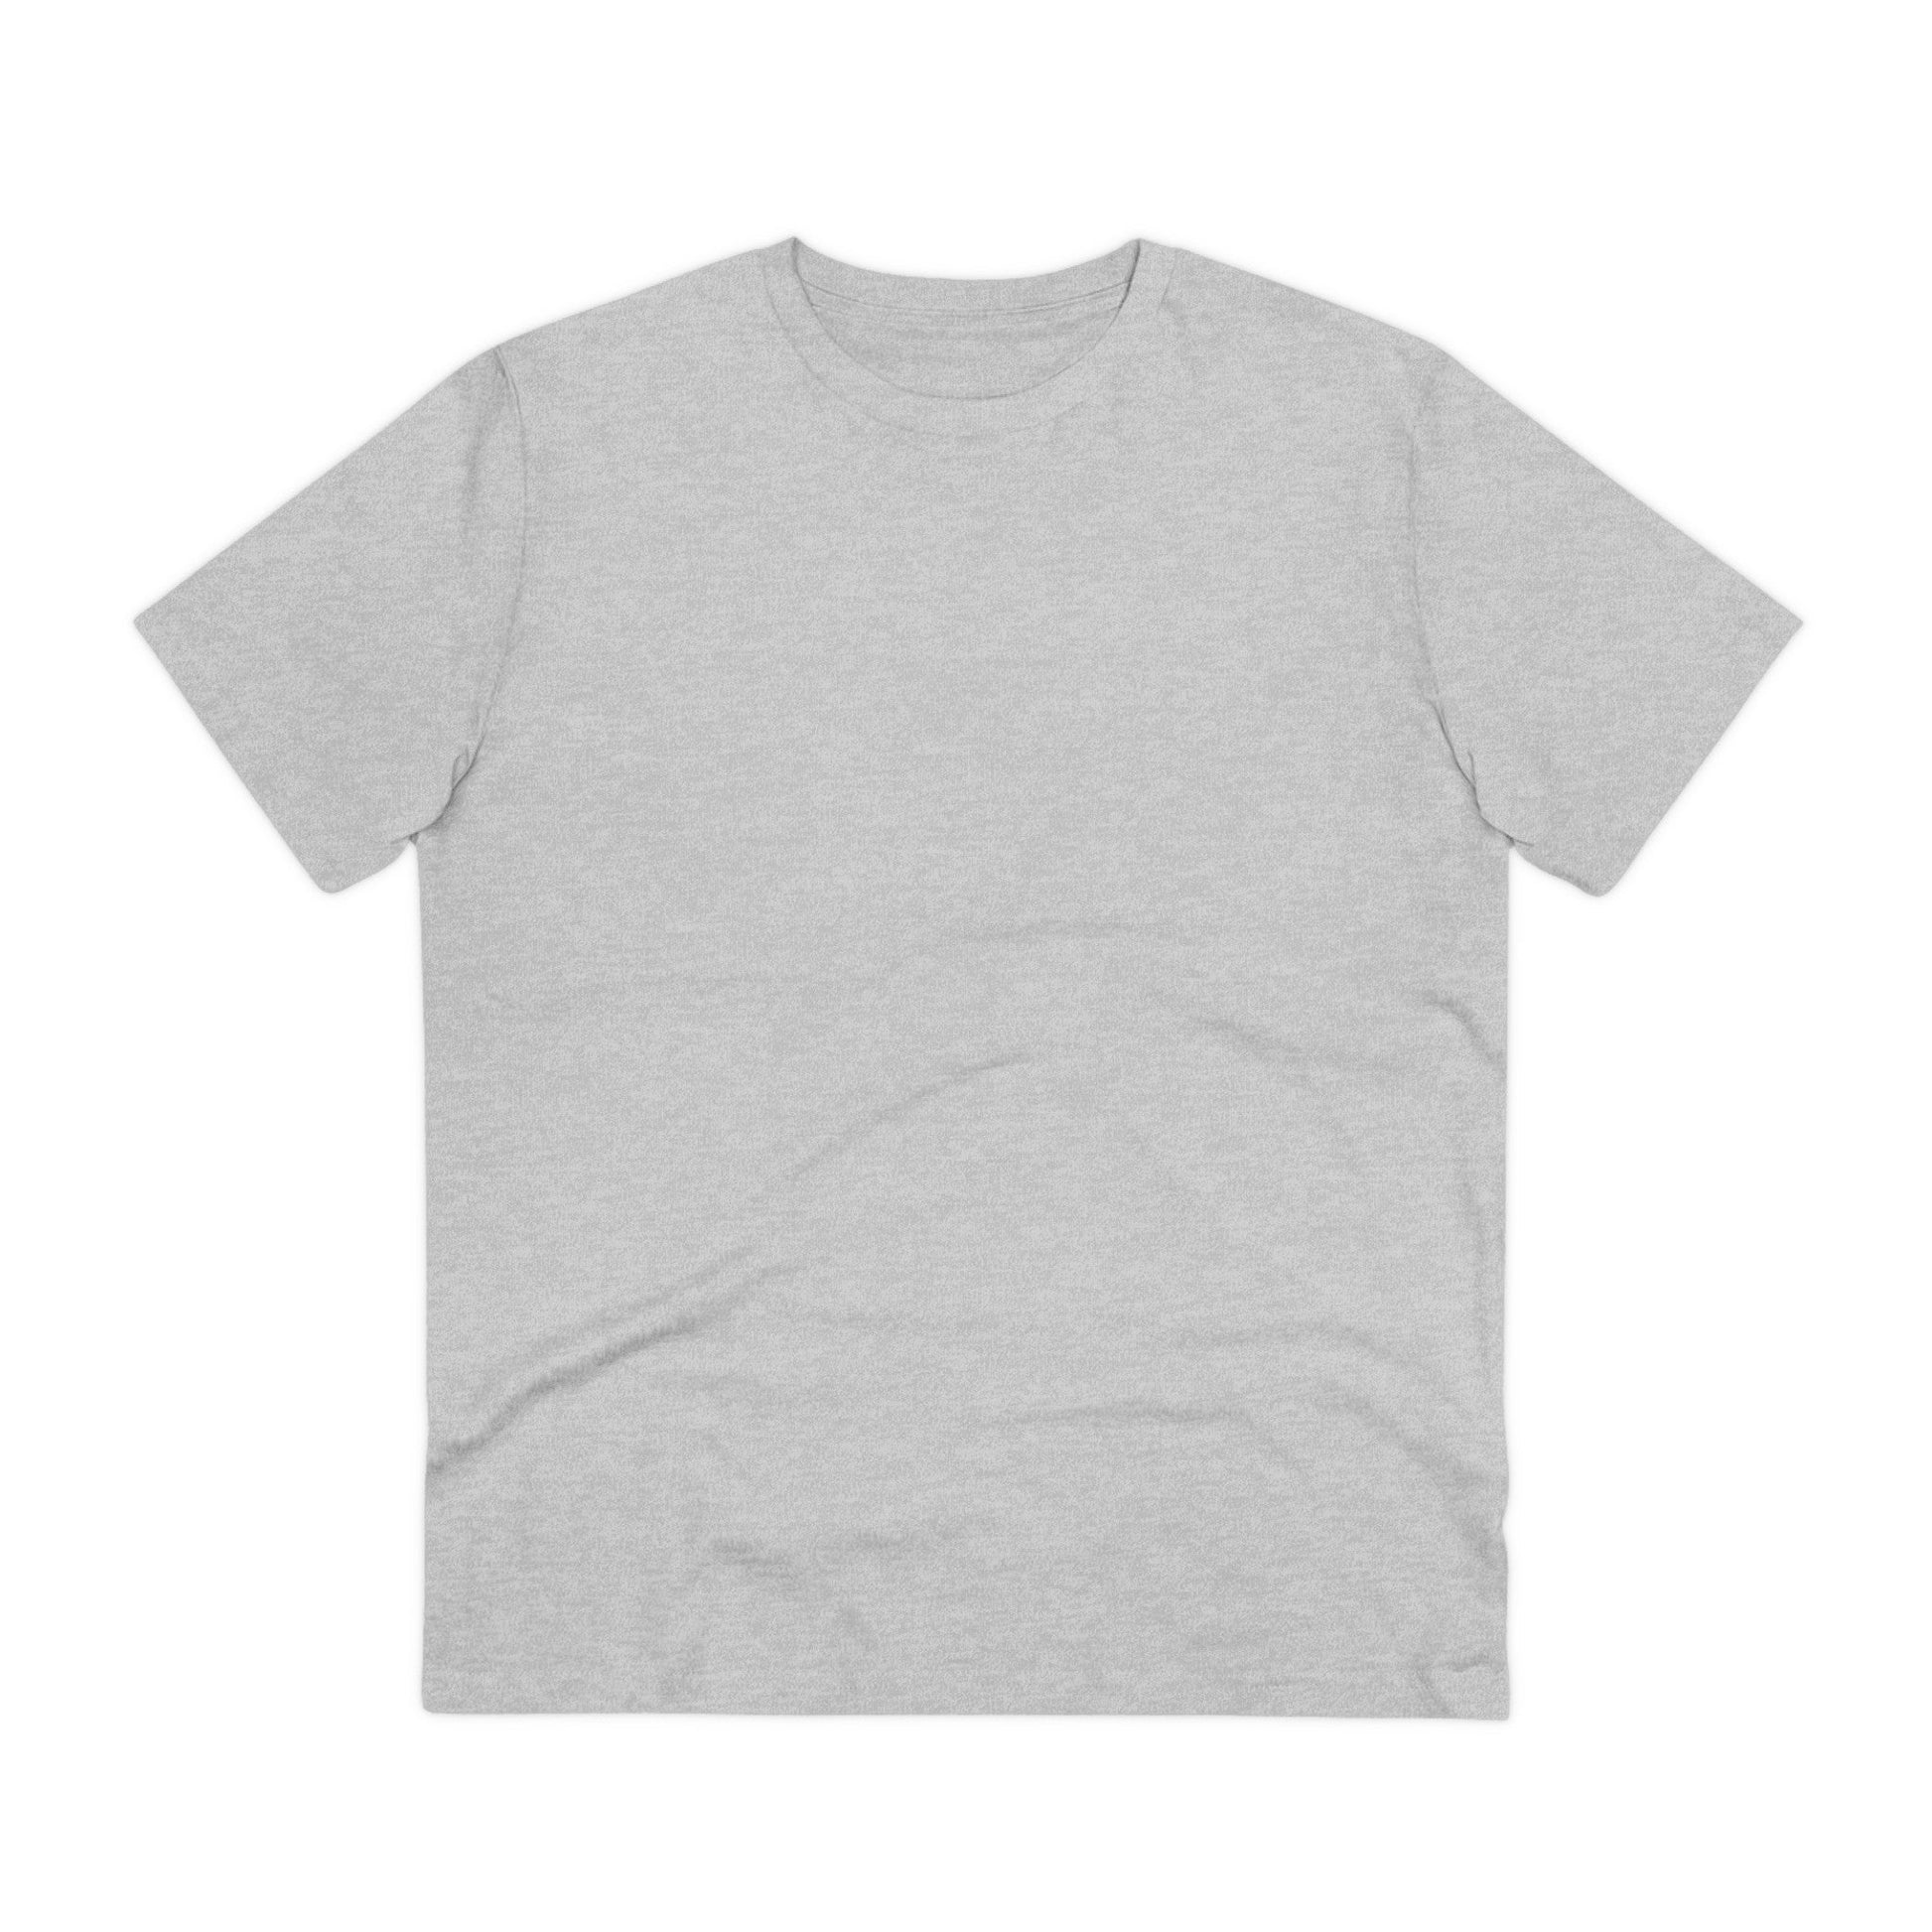 Printify T-Shirt Dream Chasing - Streetwear - Gods Way - Back Design